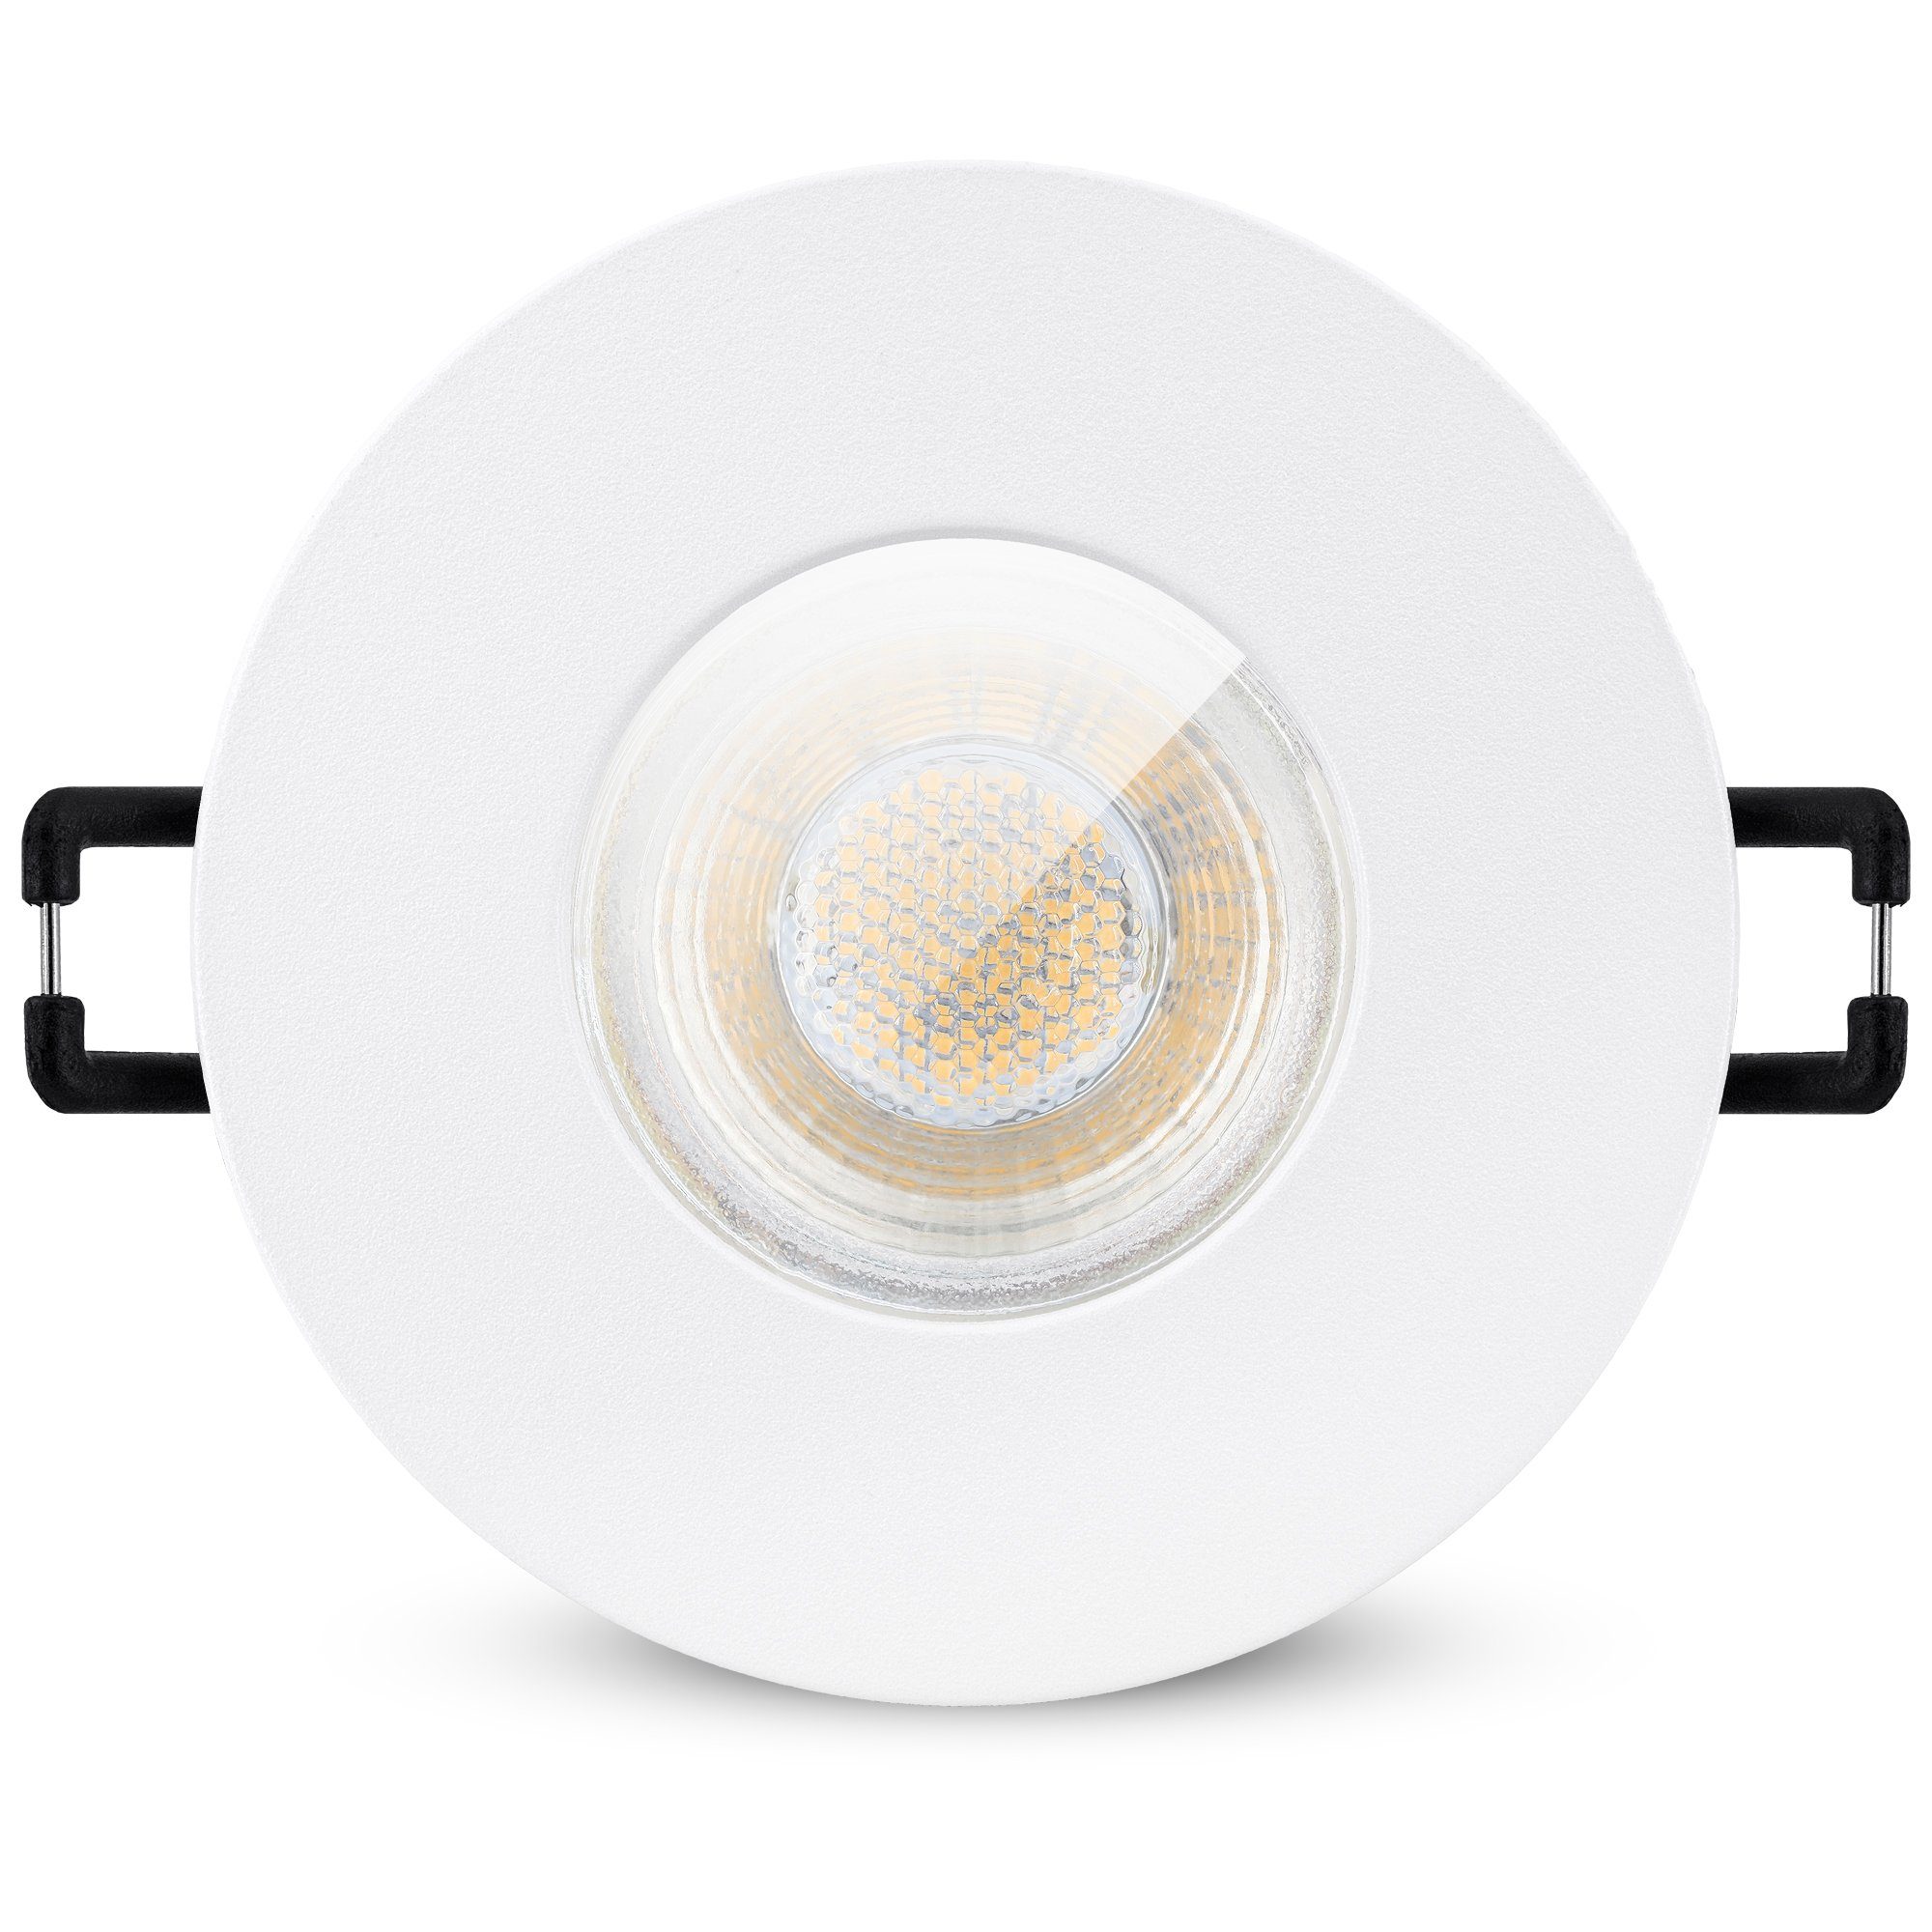 linovum LED inklusive, Set - 10er Einbauleuchten 6W Spot, inklusive Leuchtmittel IP65 230V neutralweiss Einbaustrahler Leuchtmittel GU10 LED